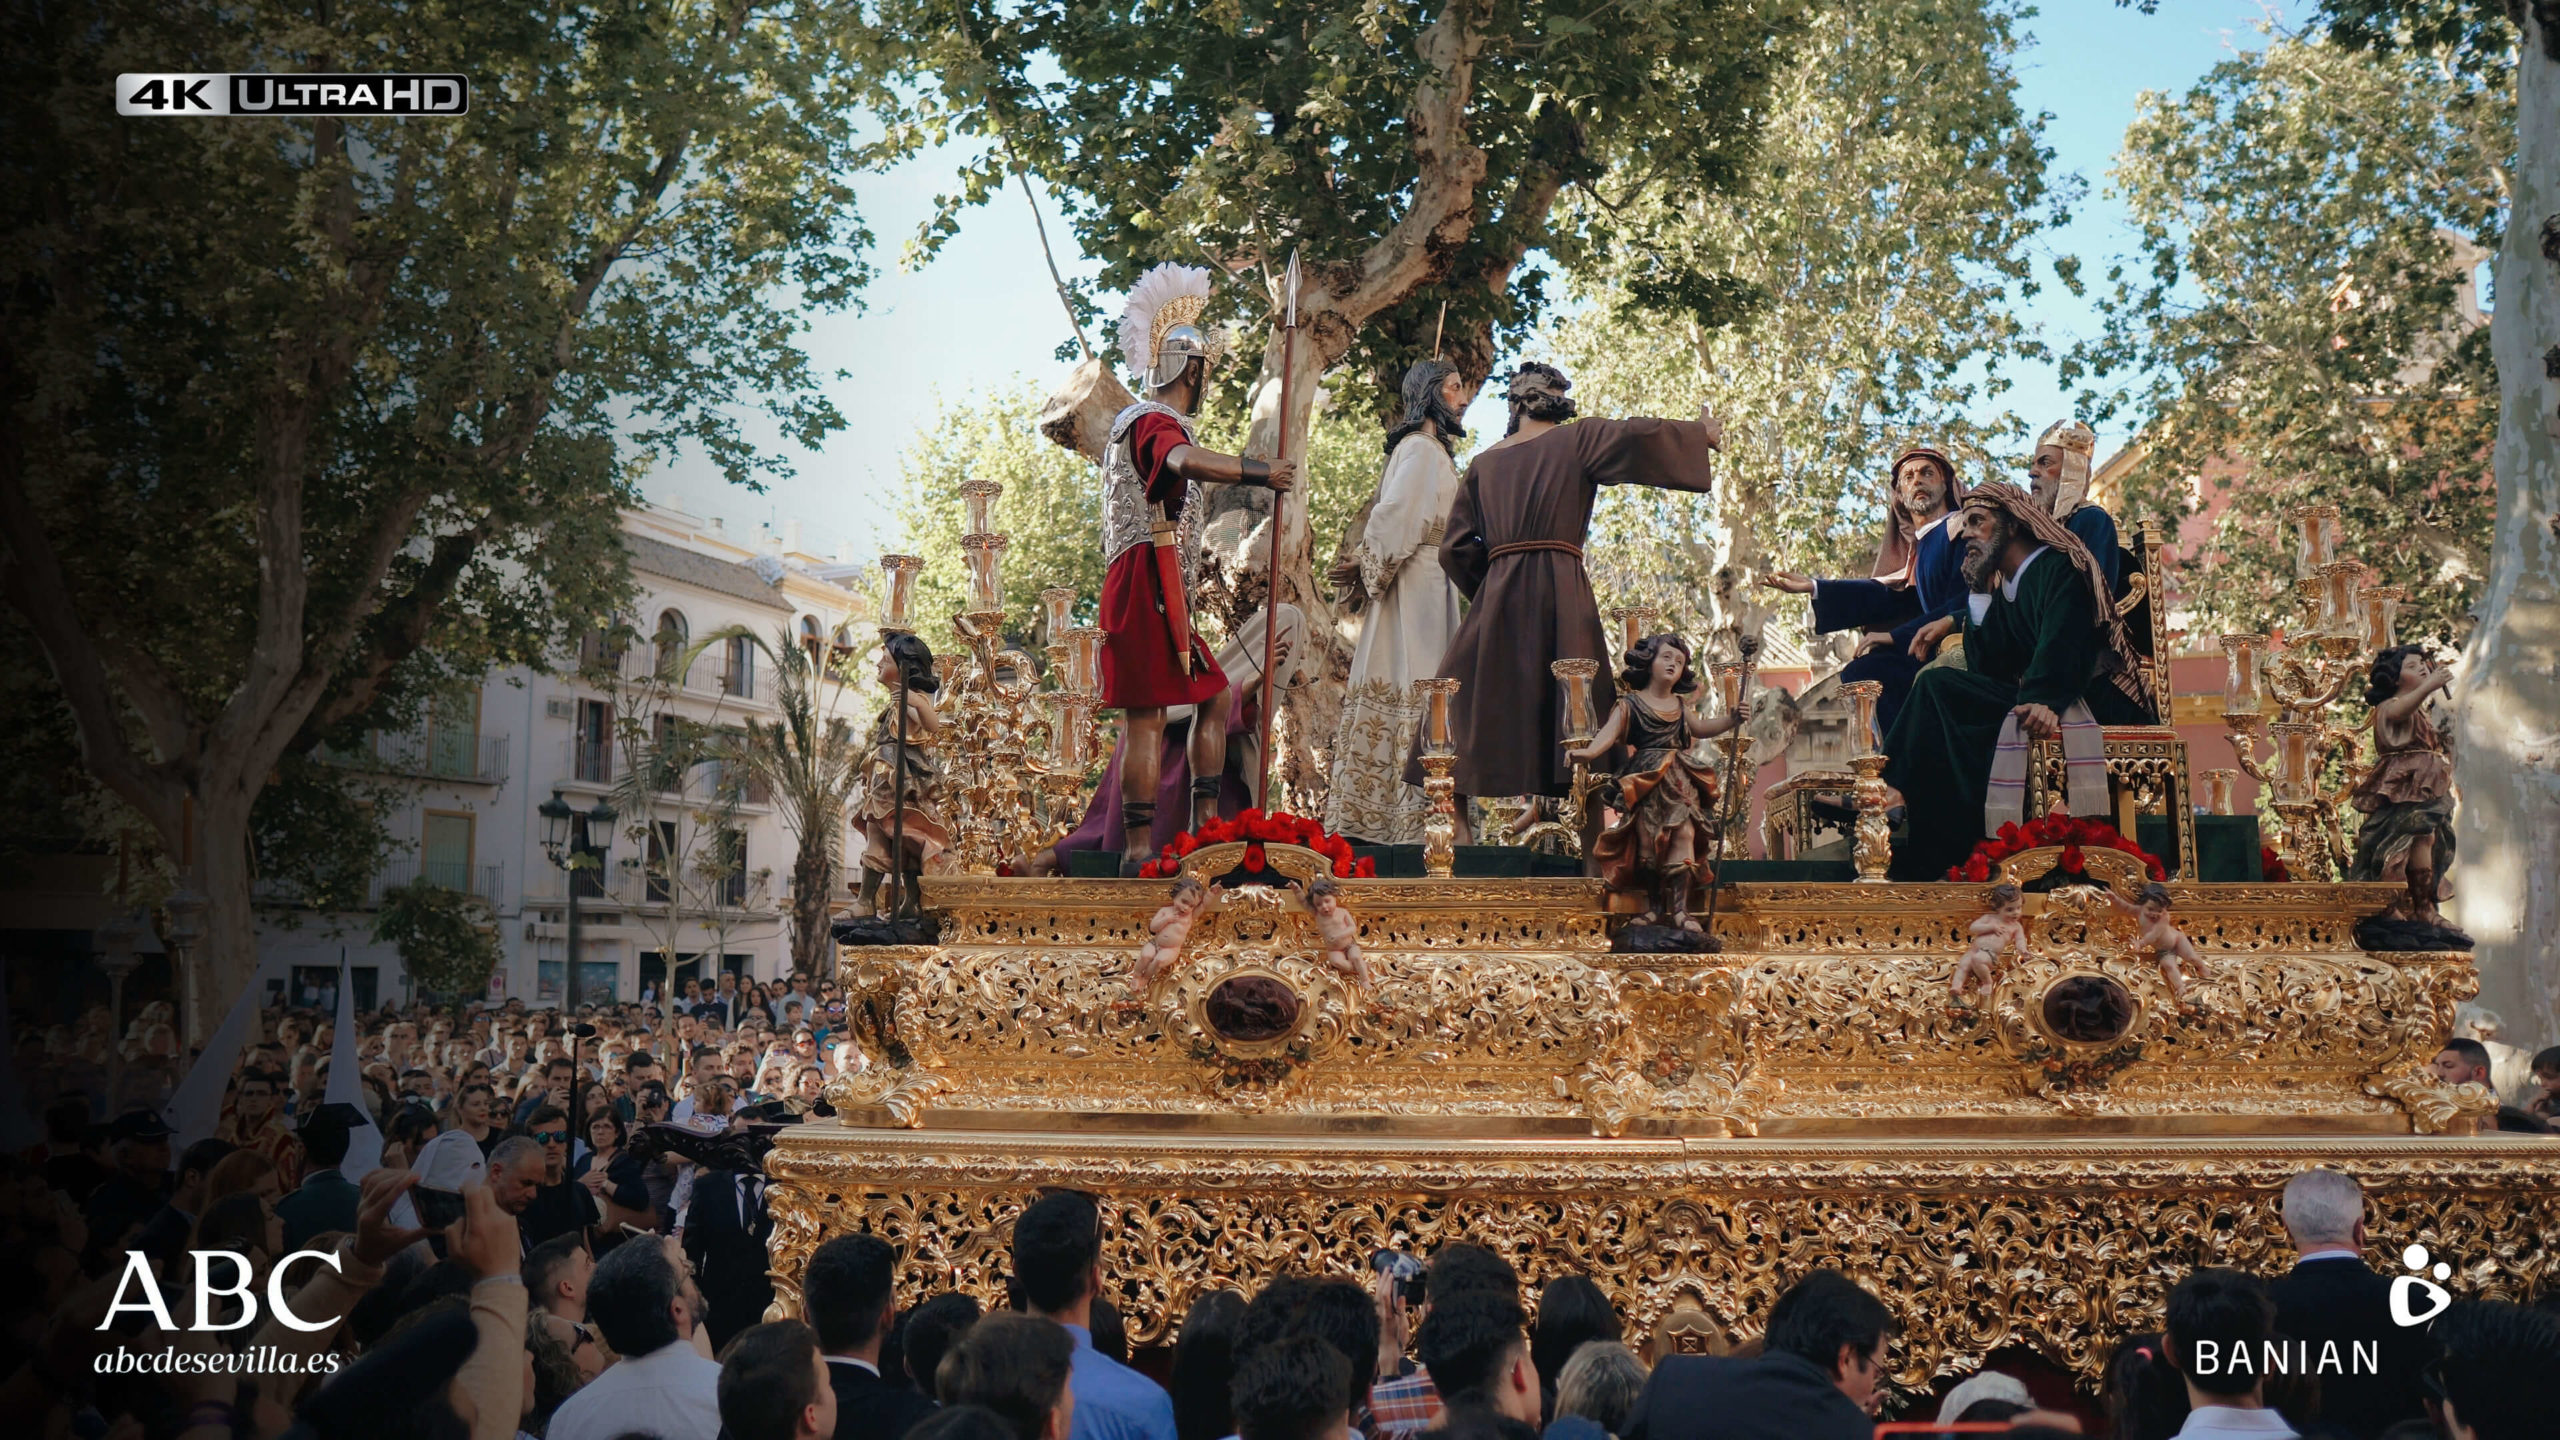 Semana Santa de Sevilla 2020